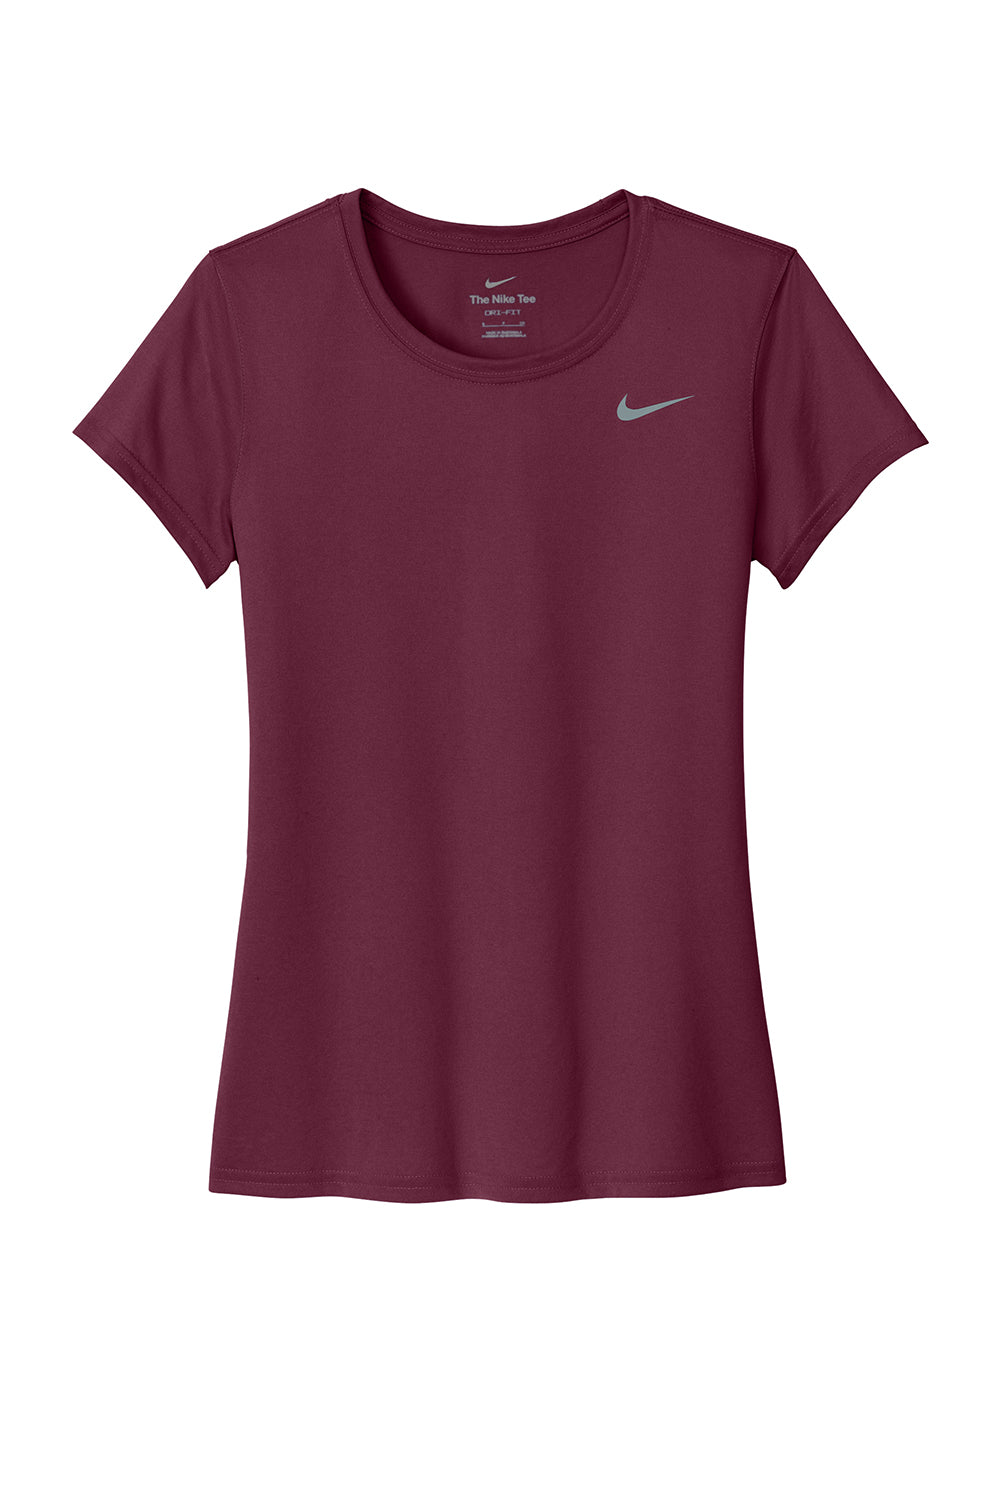 Nike DV7312 Womens Team rLegend Dri-Fit Moisture Wicking Short Sleeve Crewneck T-Shirt Deep Maroon Flat Front